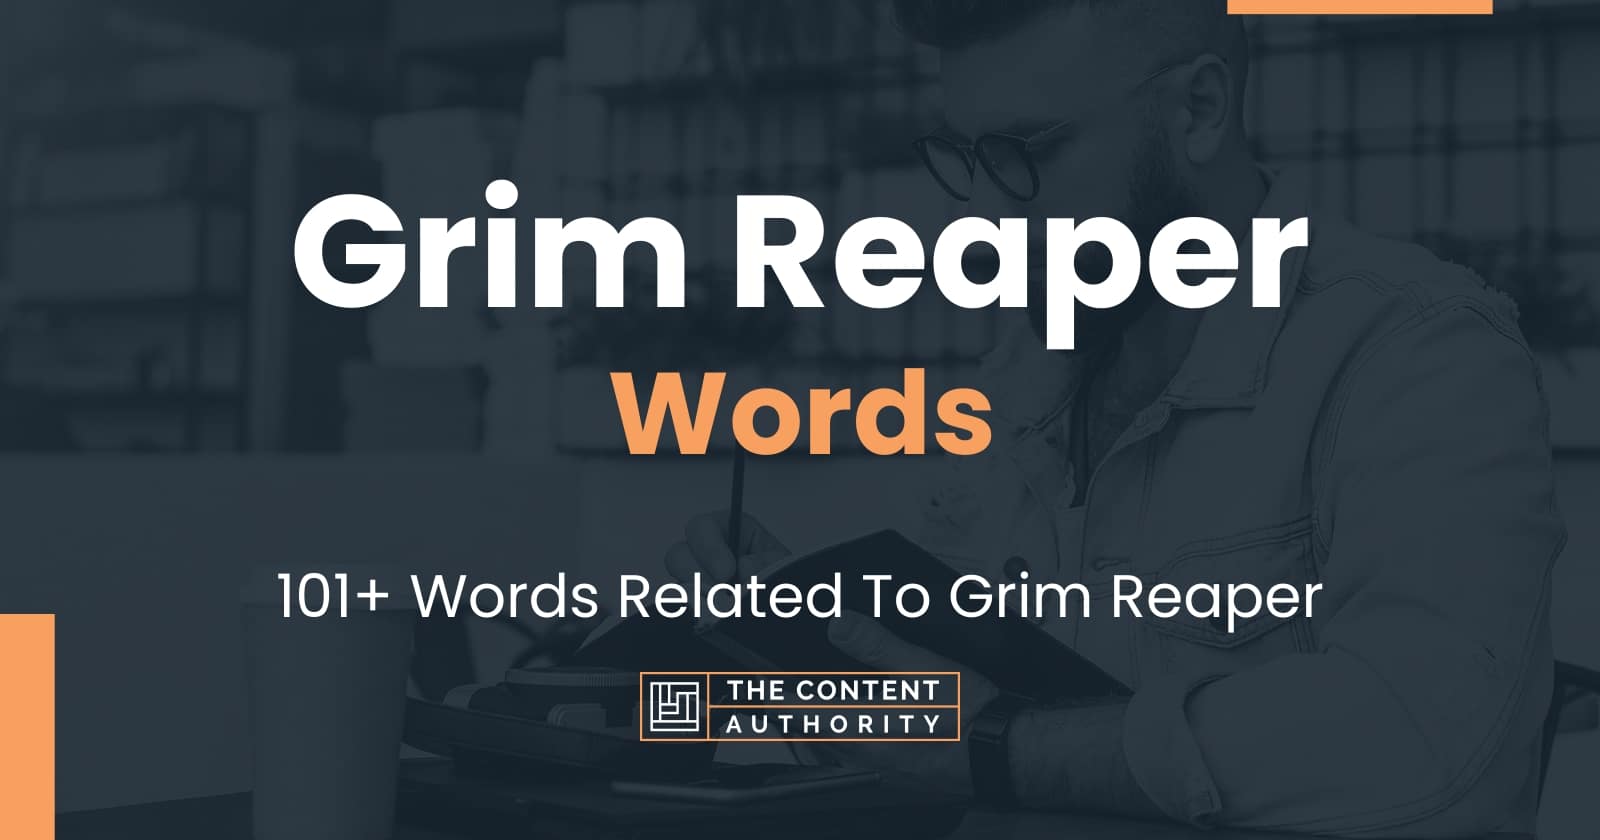 Grim Reaper Words - 101+ Words Related To Grim Reaper